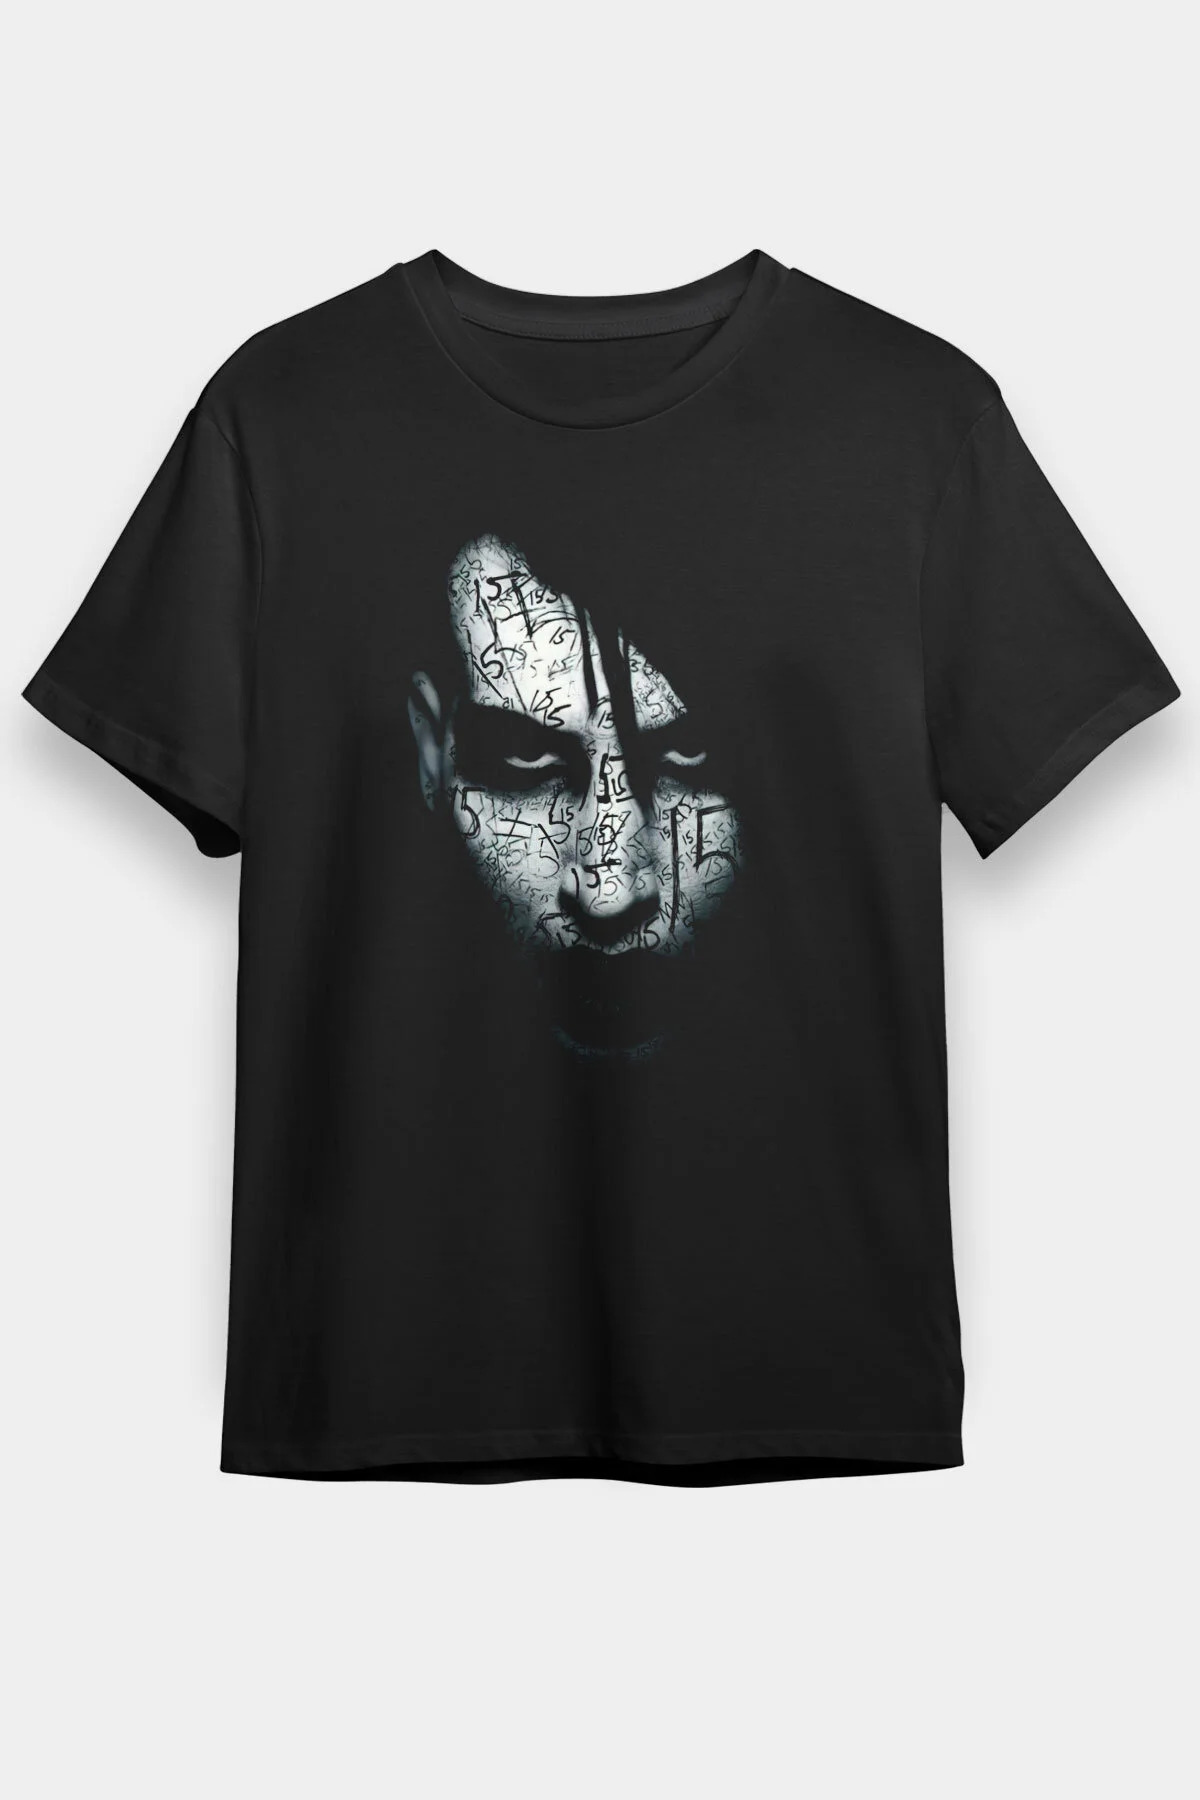 Marilyn Manson T shirt, Music Band ,Unisex Tshirt 10